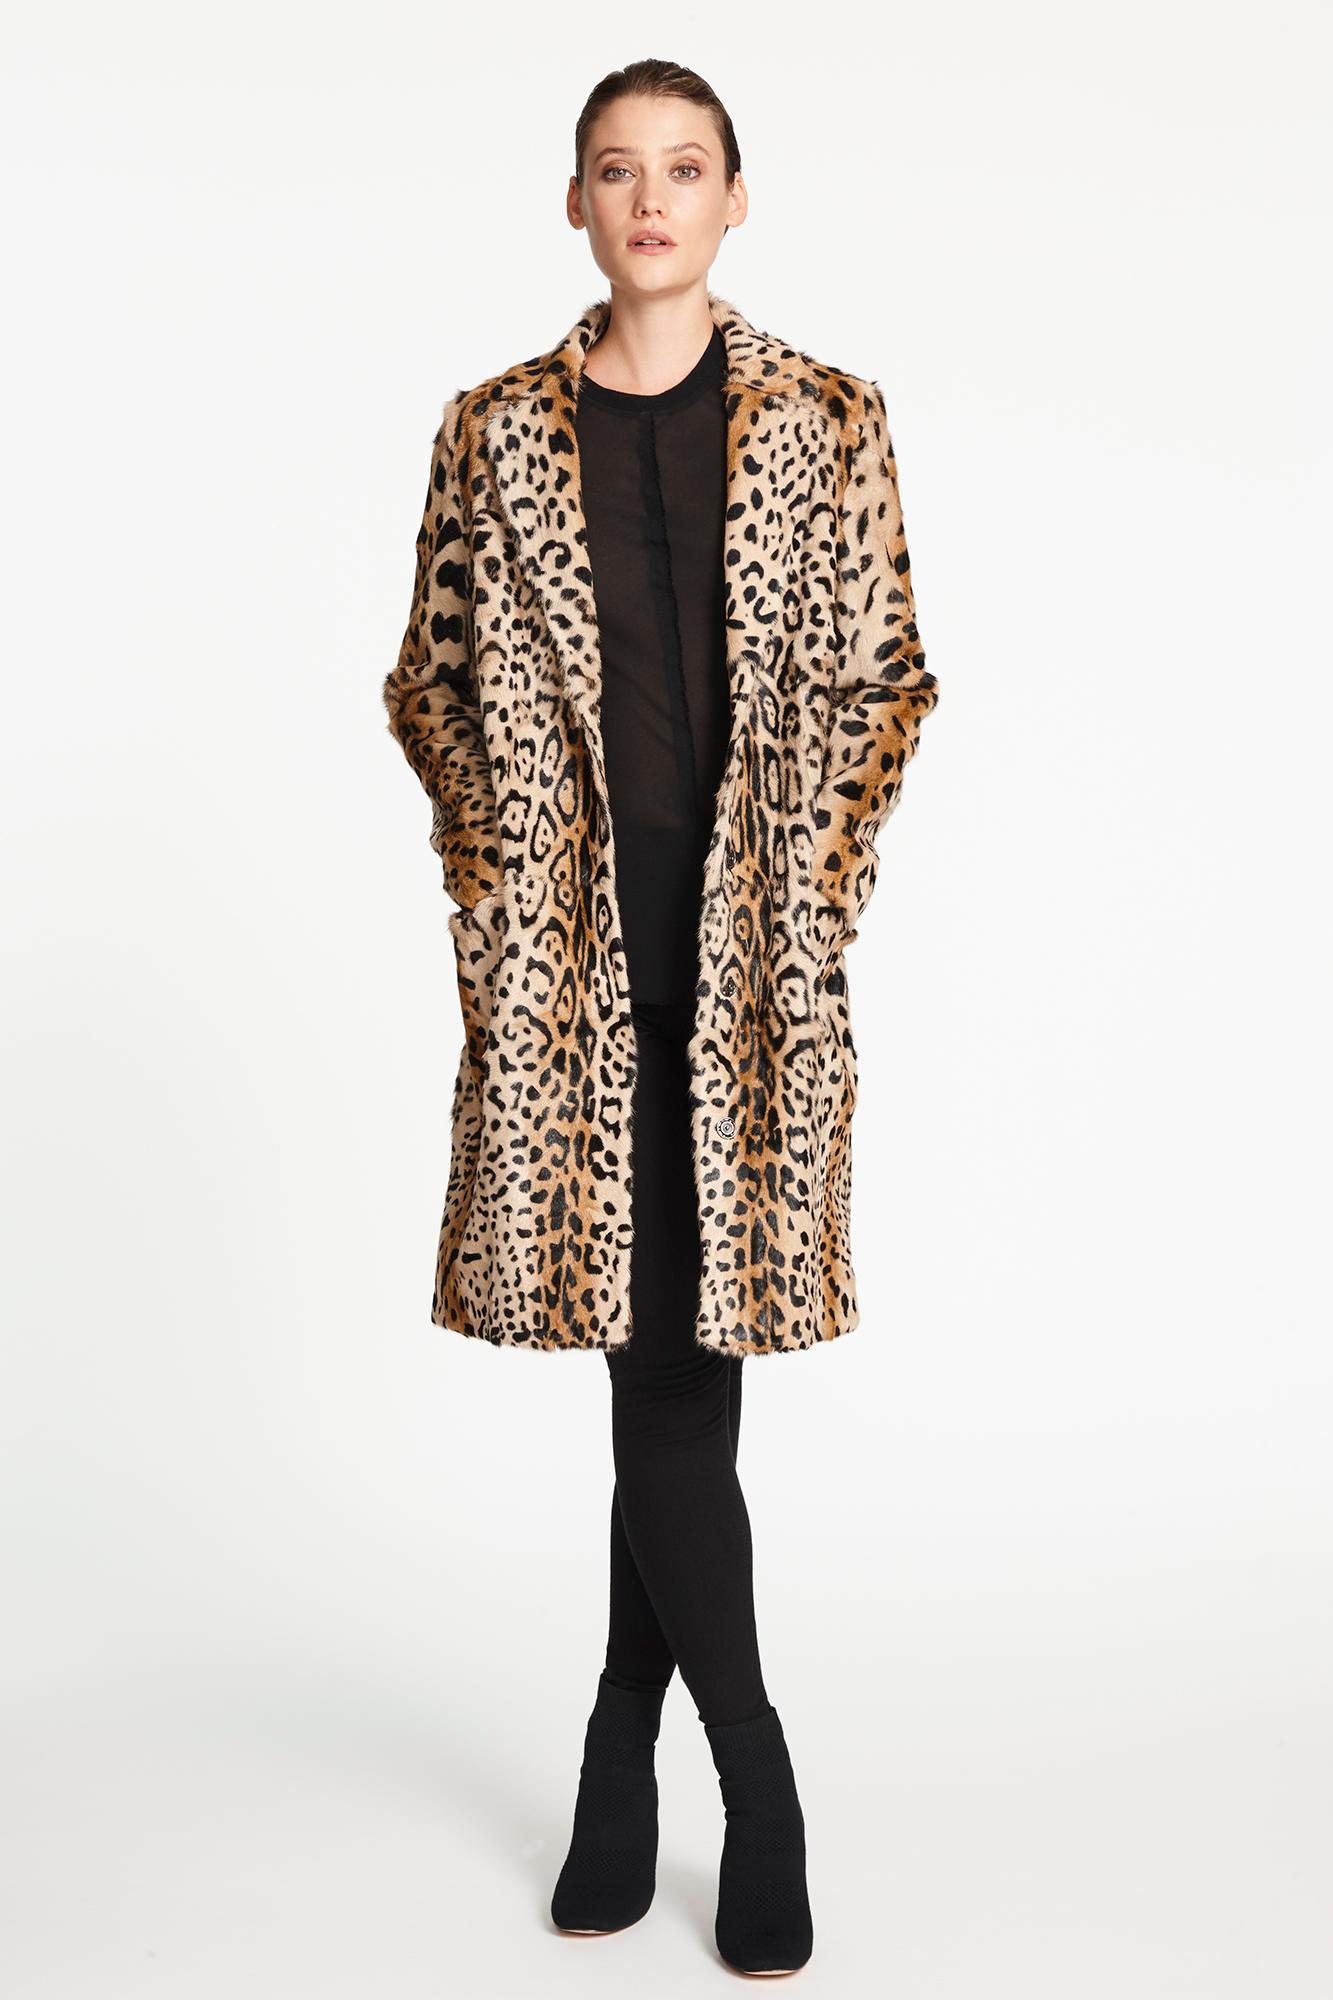 Women's Verheyen London Leopard Print Coat in Natural Goat Hair Fur UK 6 